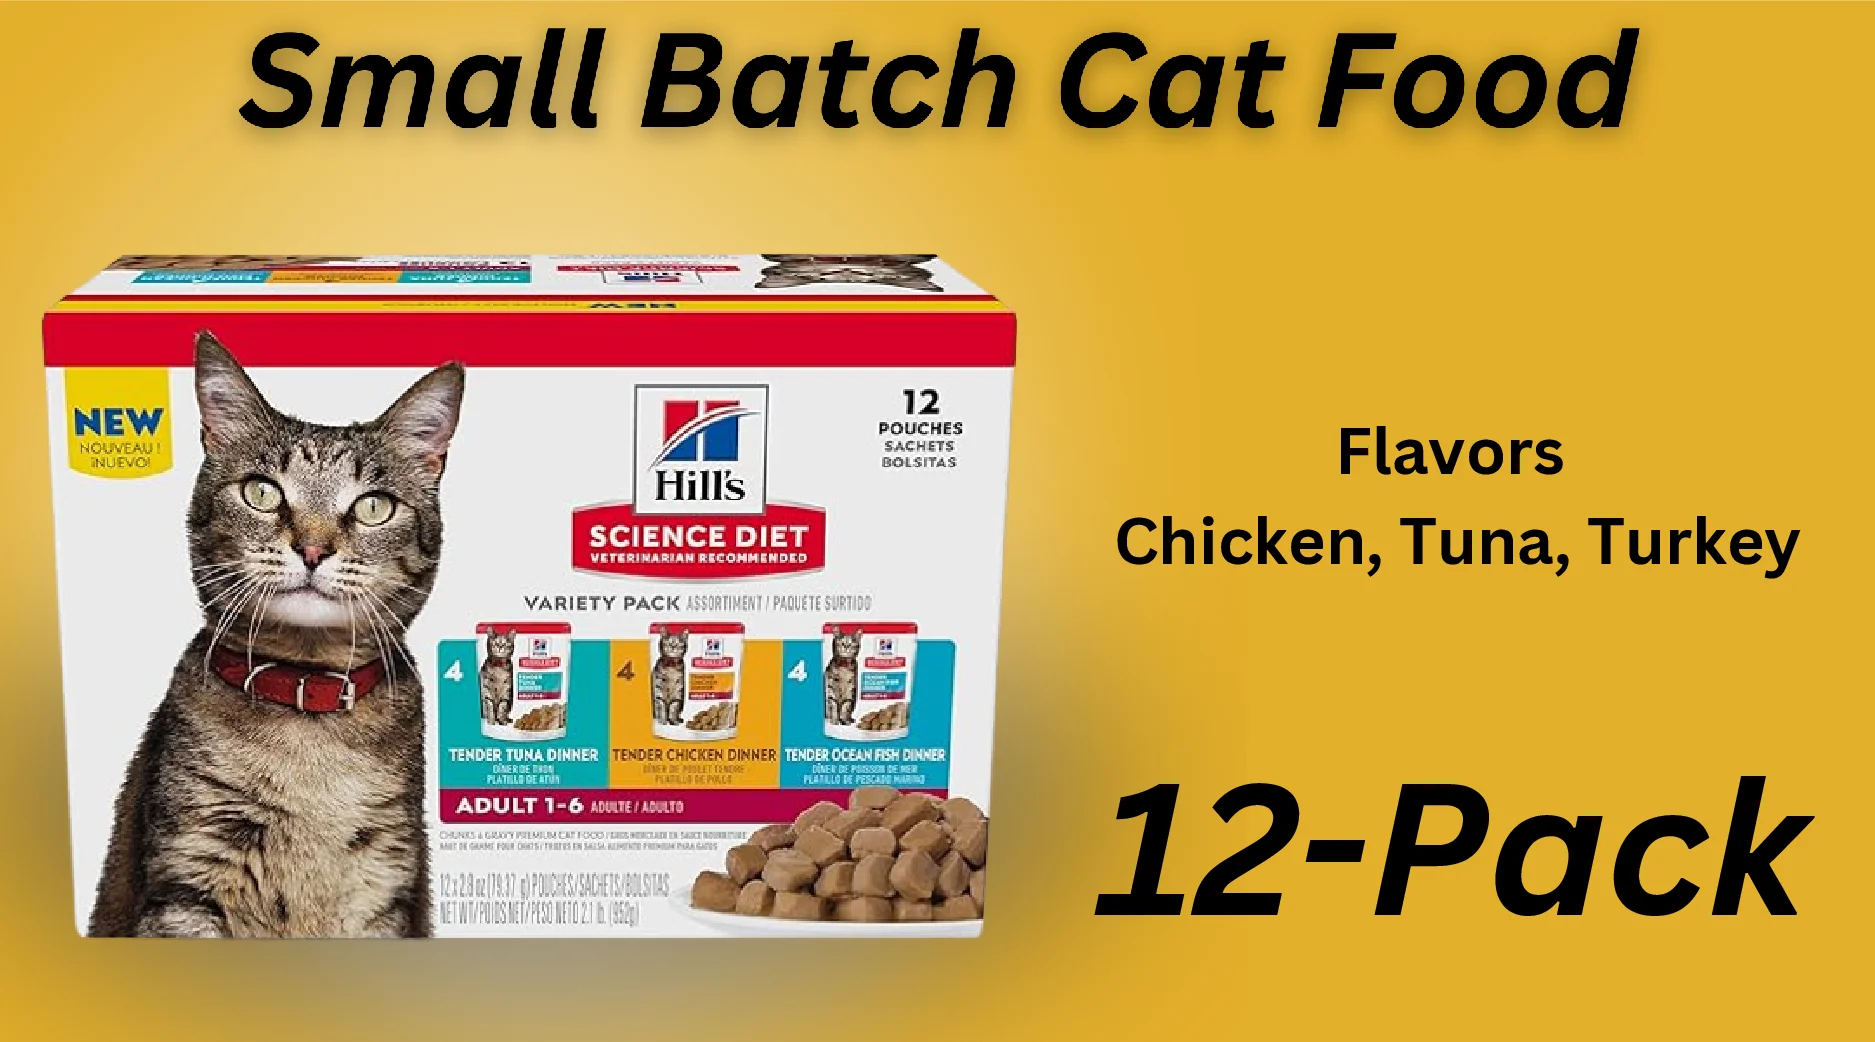 Small Batch Cat Food